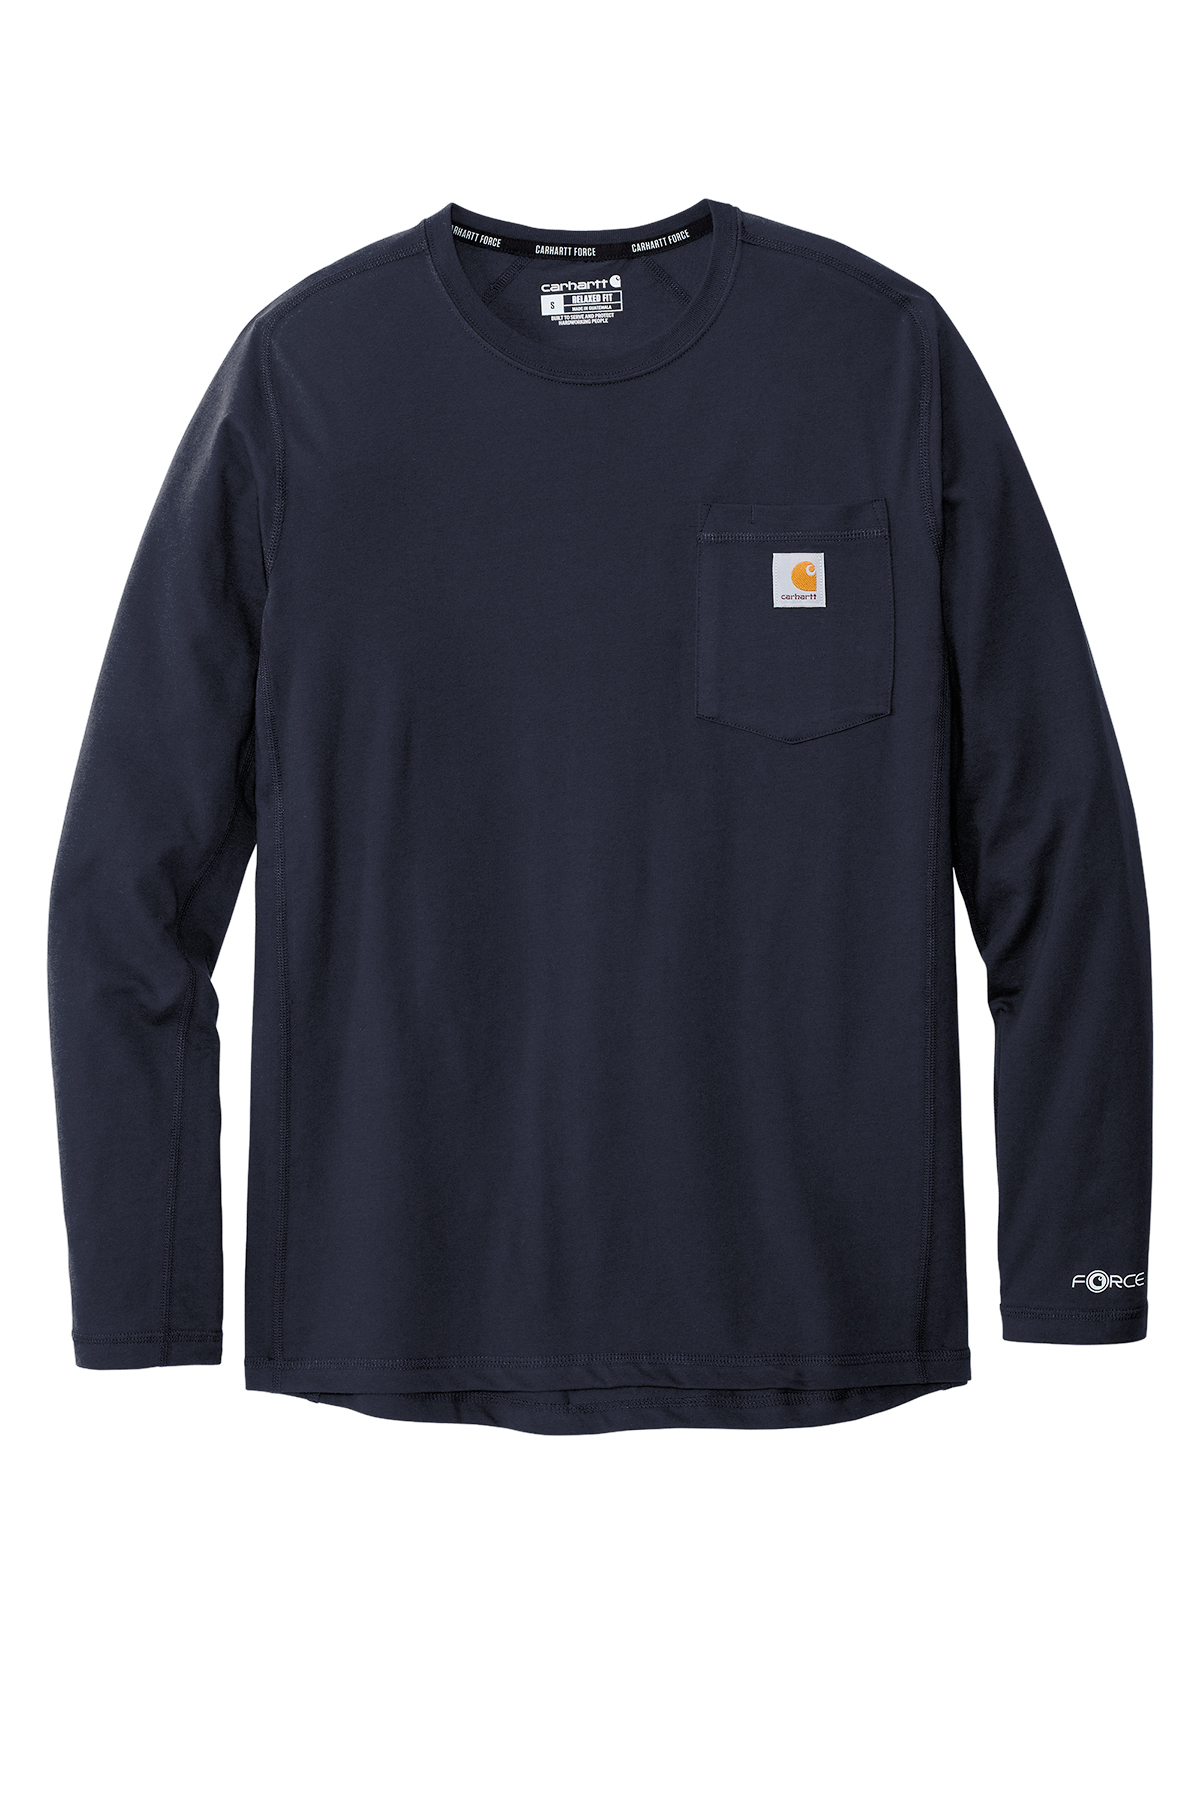 Carhartt Force Long Sleeve Pocket T-Shirt | Product | Company Casuals